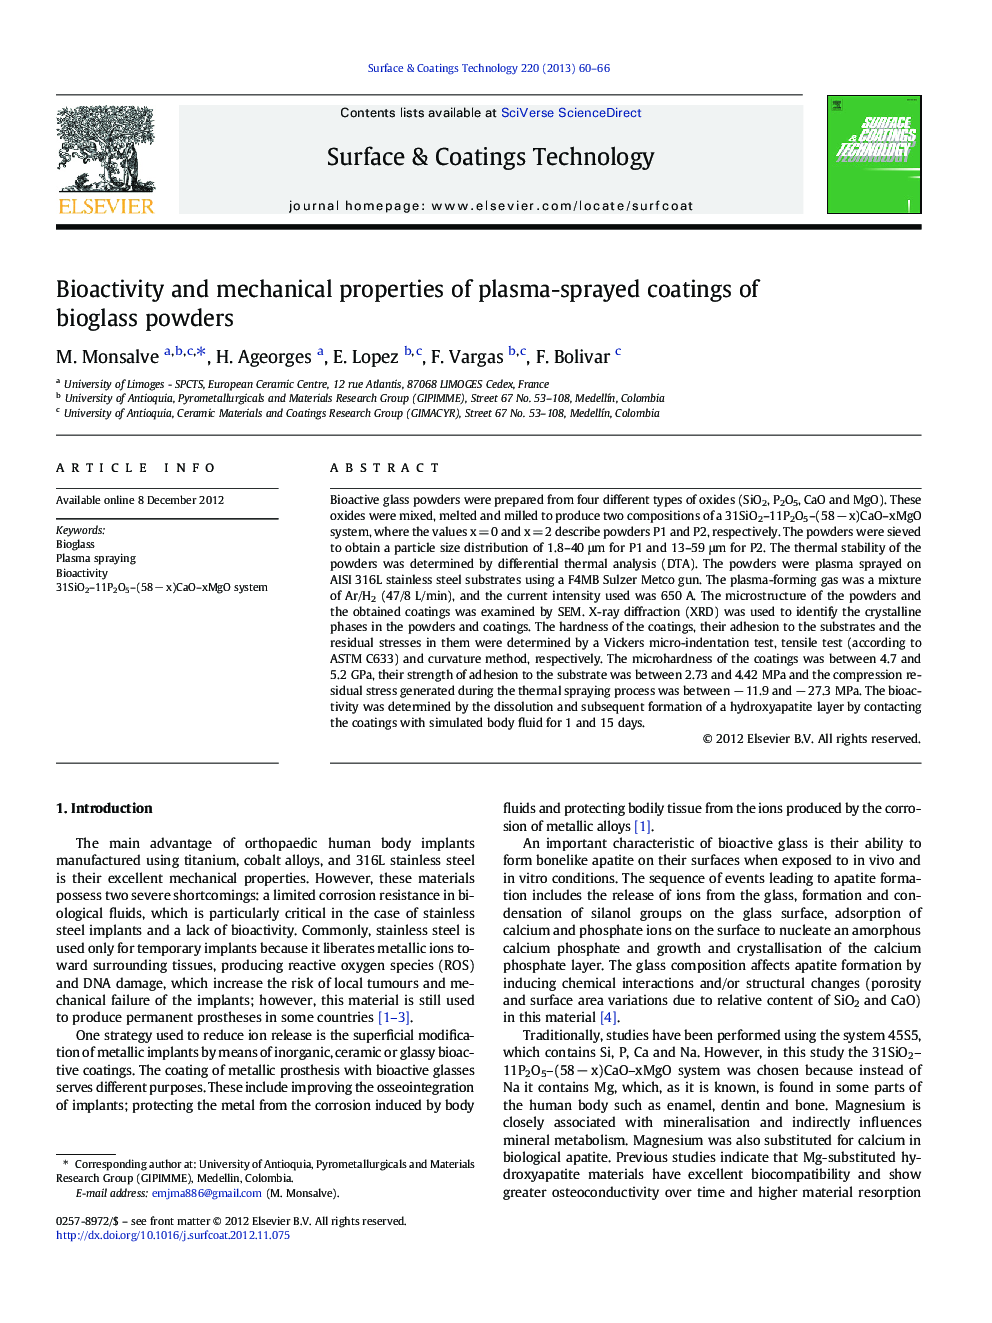 Bioactivity and mechanical properties of plasma-sprayed coatings of bioglass powders